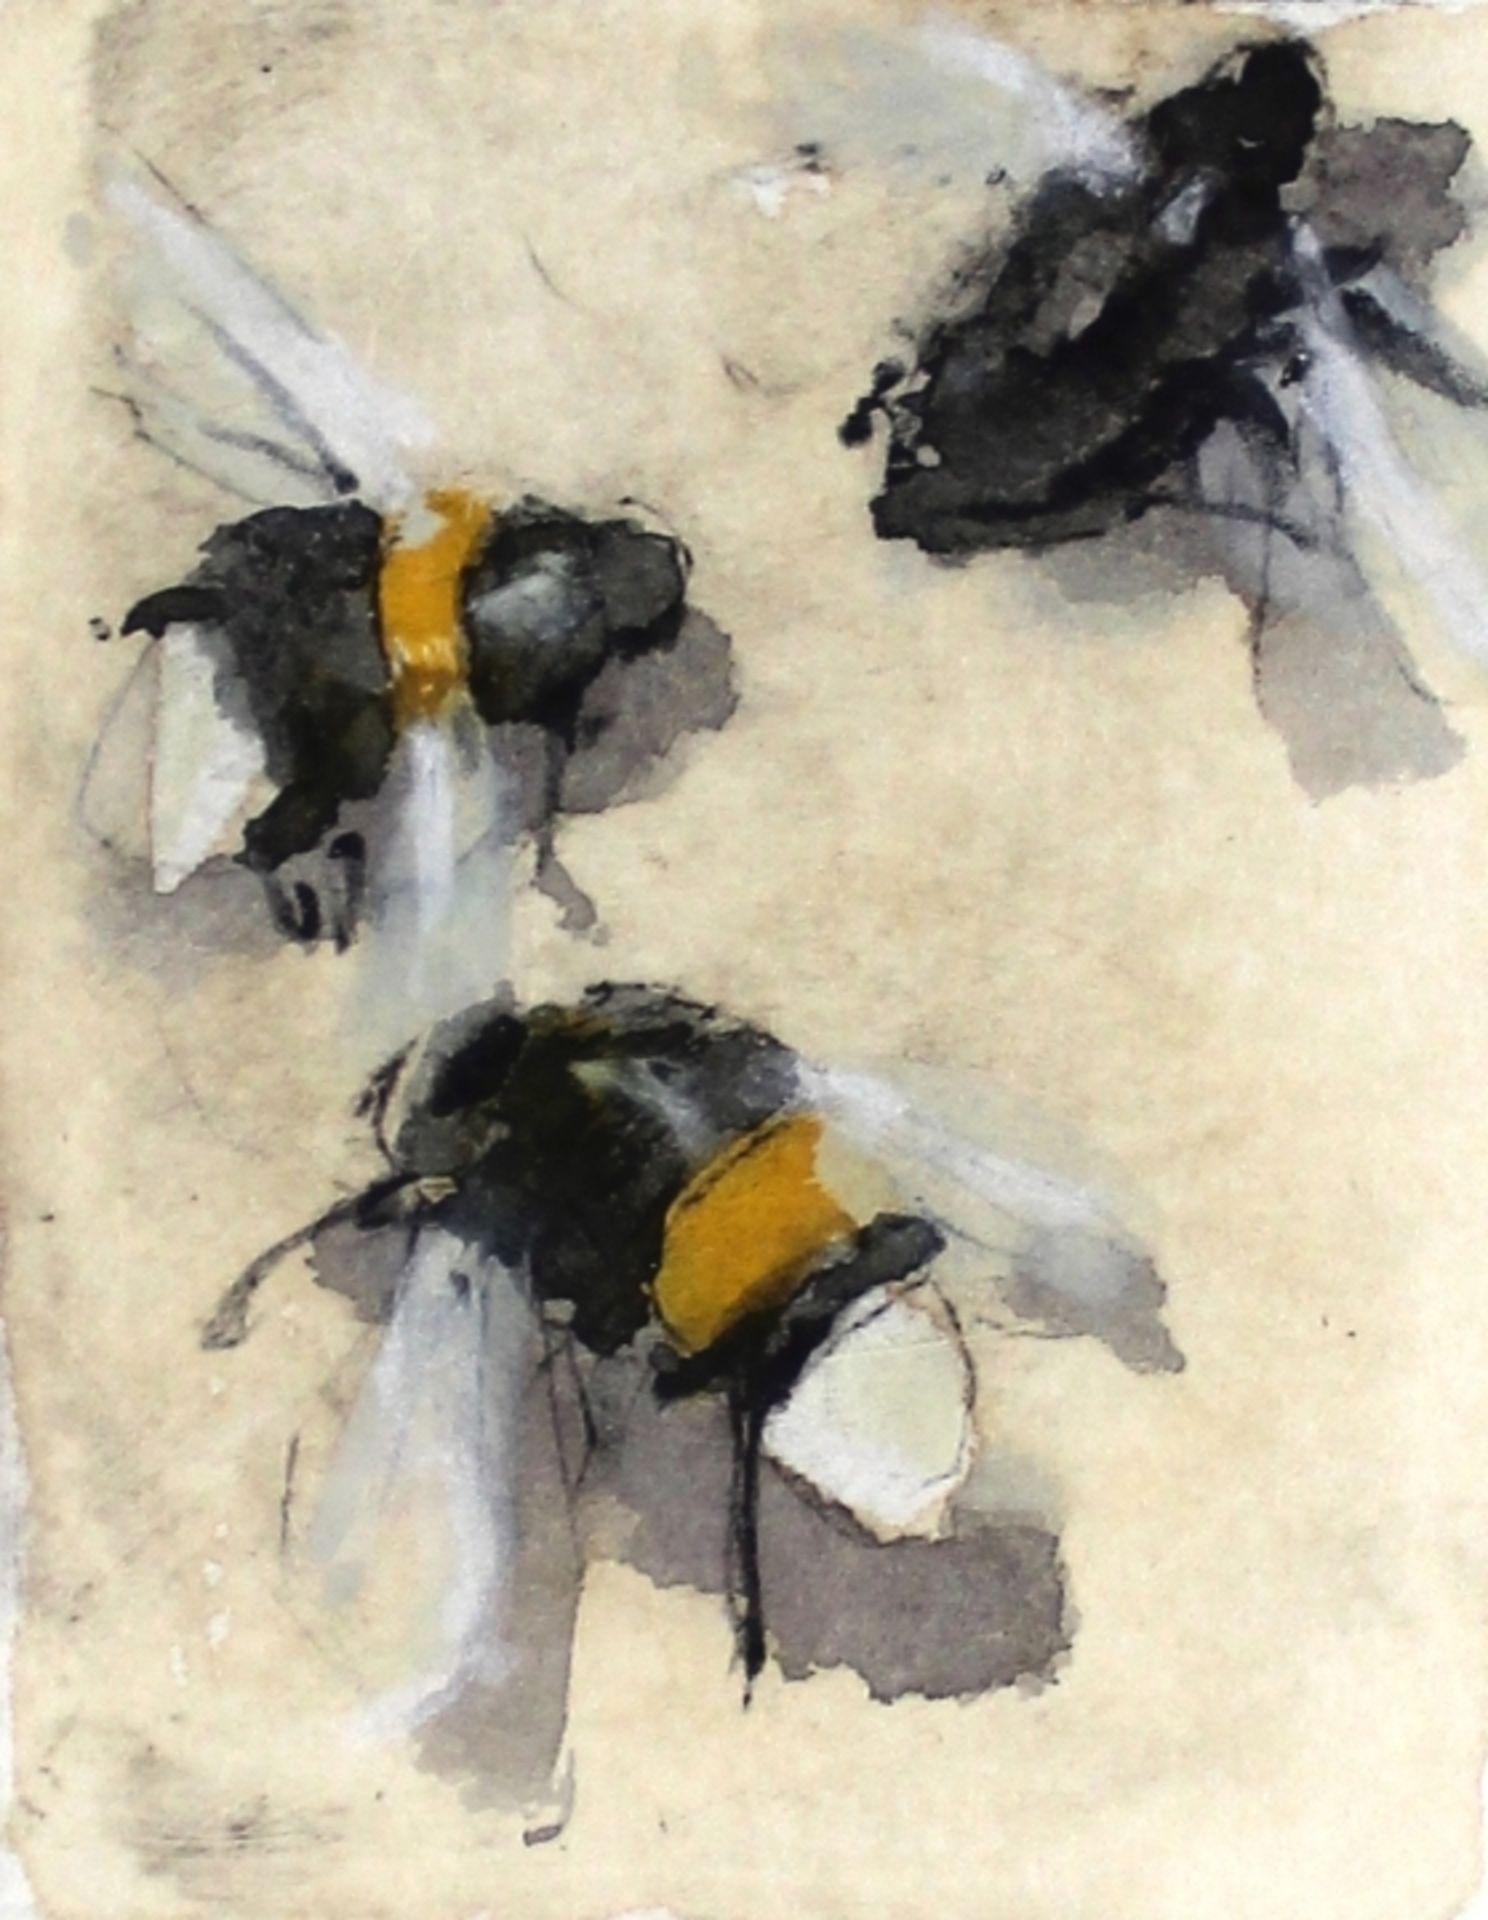 Aquarell über Radierskizze- Gerhard Prechtl (1951 Regensburg) "Bienen", u.M. signiert, Plattenmaße